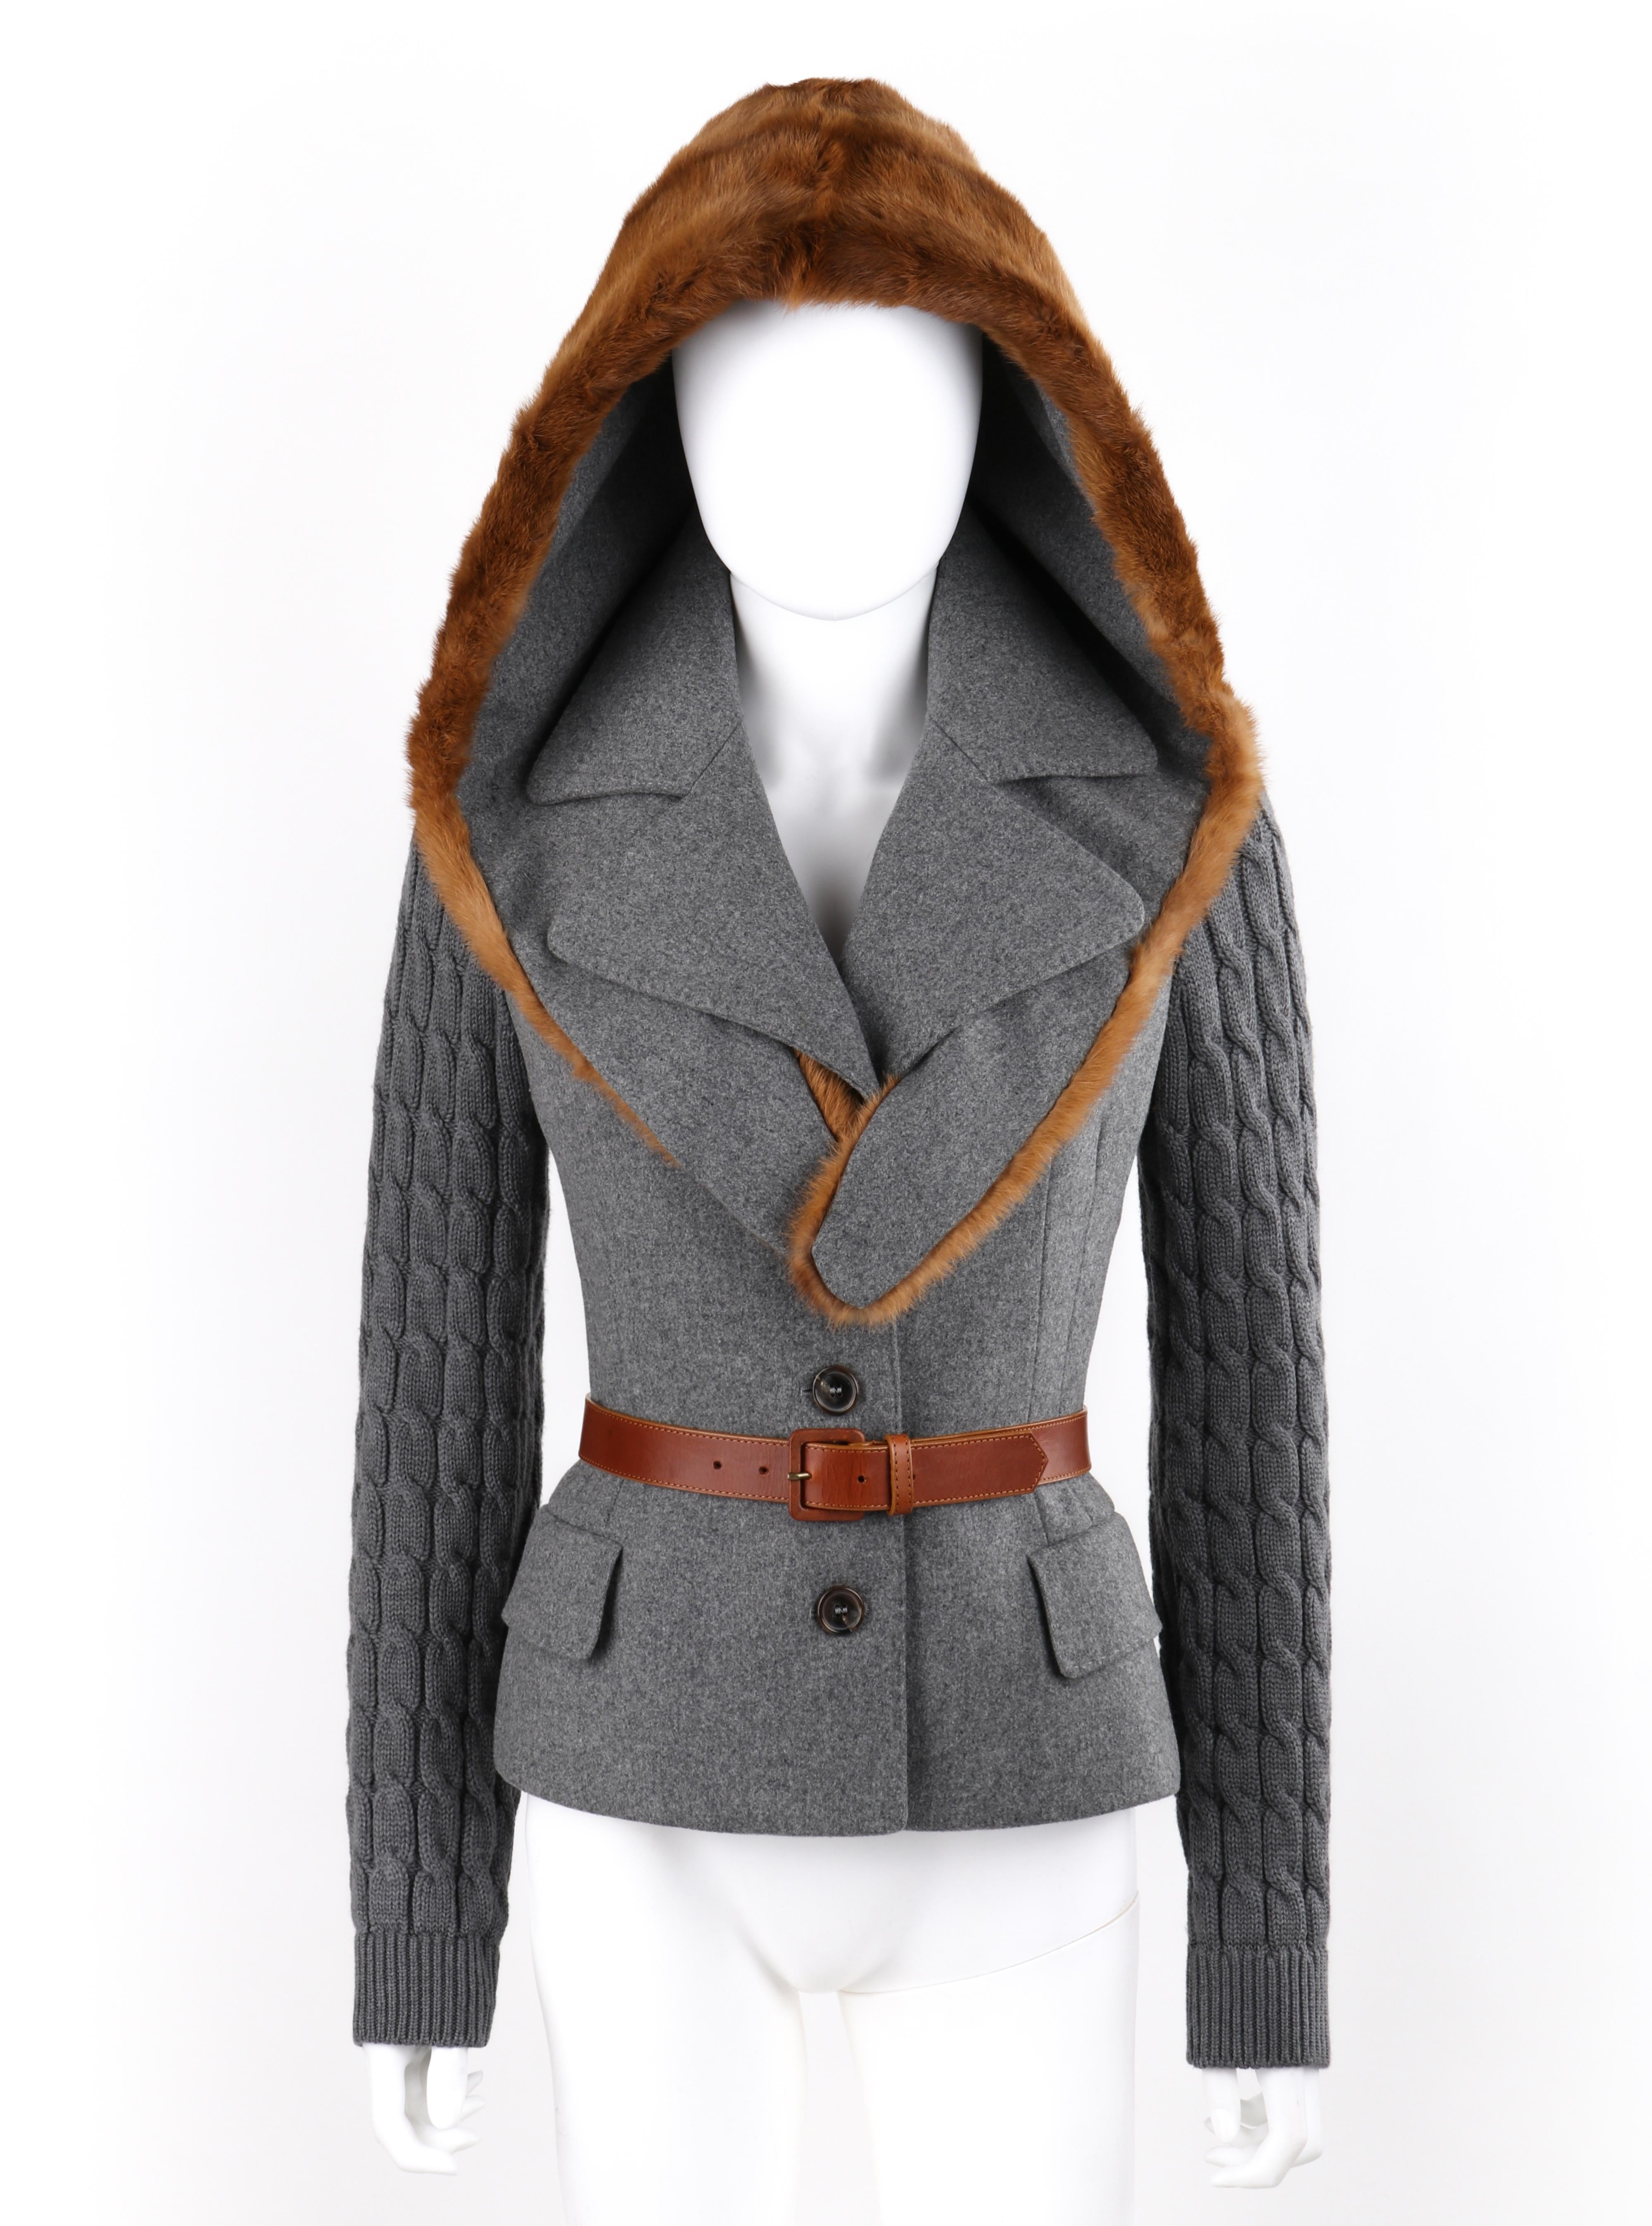 Women's ALEXANDER McQUEEN F/W 2005 Gray Brown Mink Fur Removable Hood Belted Jacket Coat For Sale